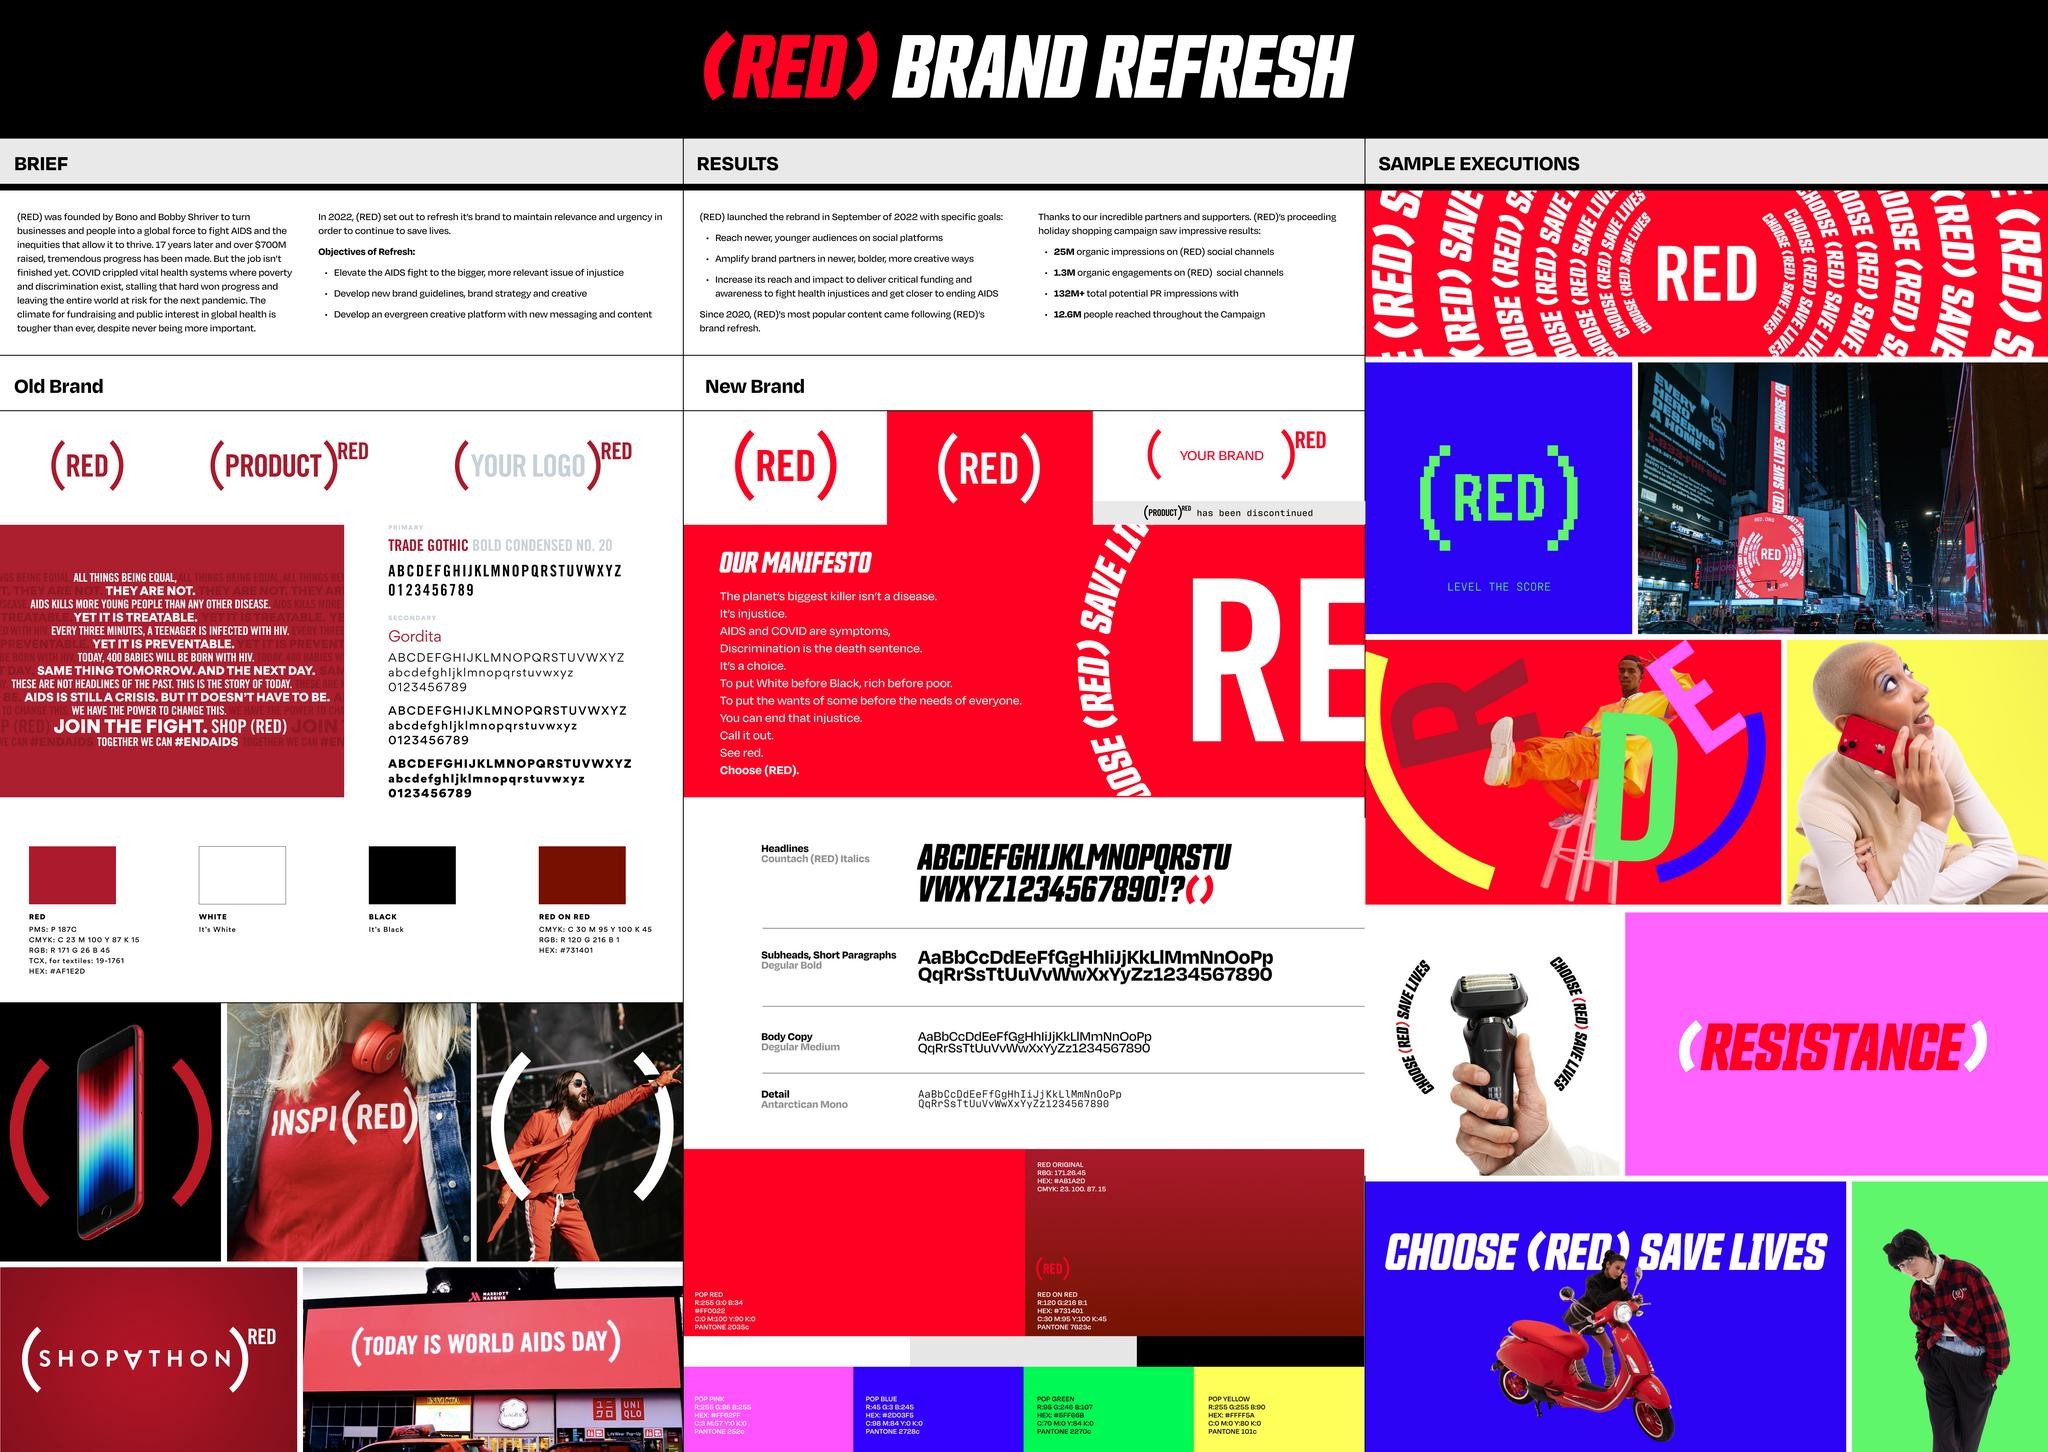 (RED)'s Brand Refresh